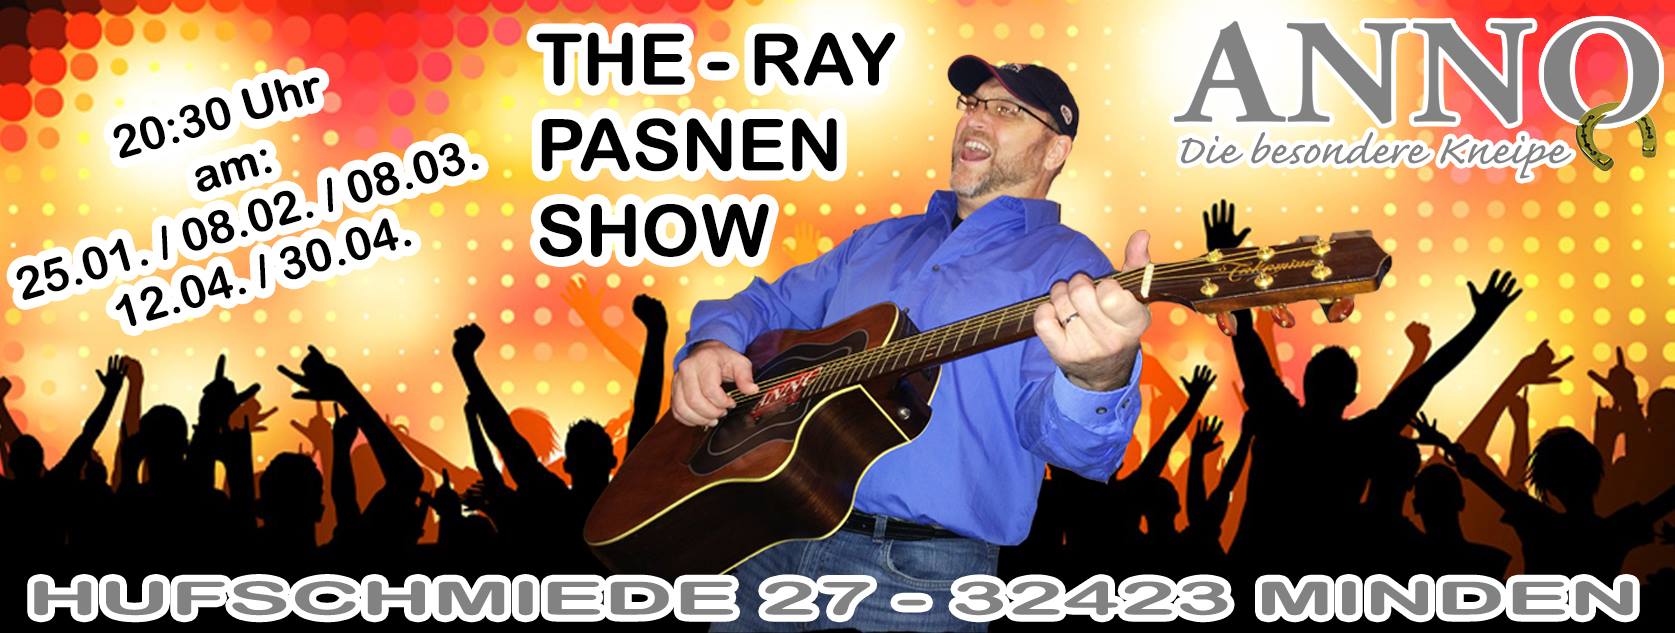 Ray Pasnen live at Anno Jan 25 - Feb 08 - Mar 08 - Apr 12 - Apr 30 - 2014